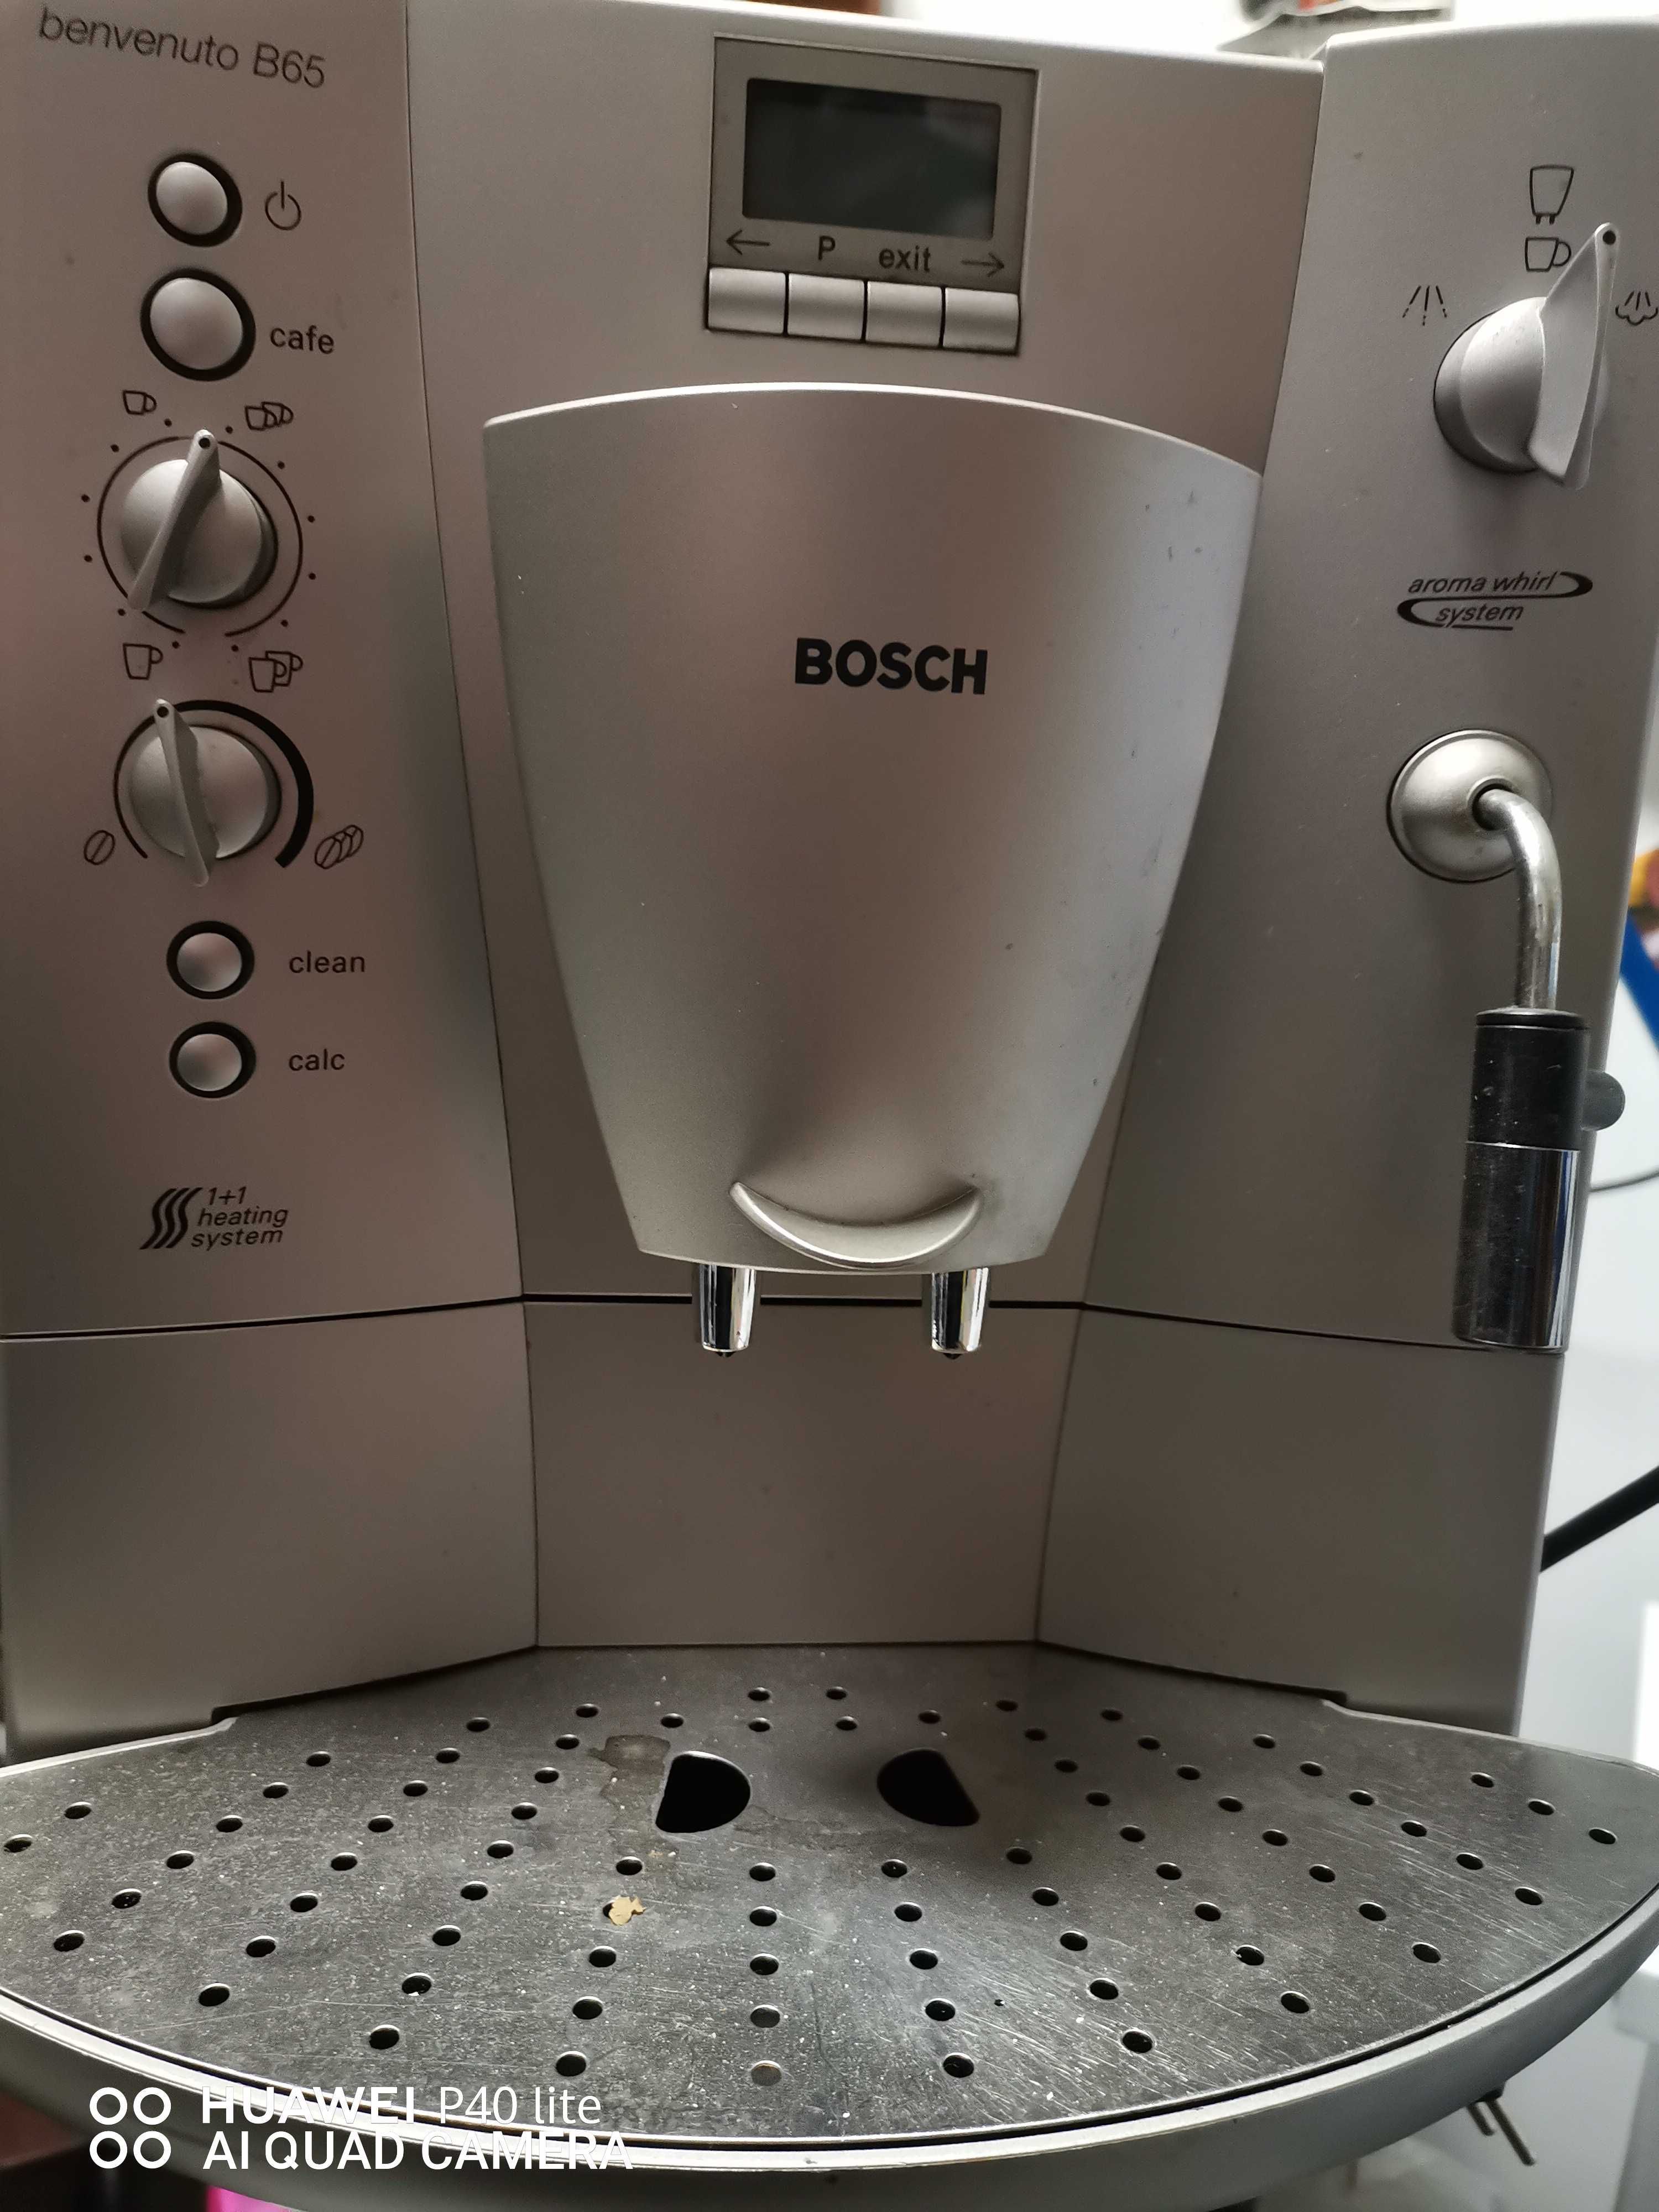 Висок клас кафе машина Bosch benvenuto B65